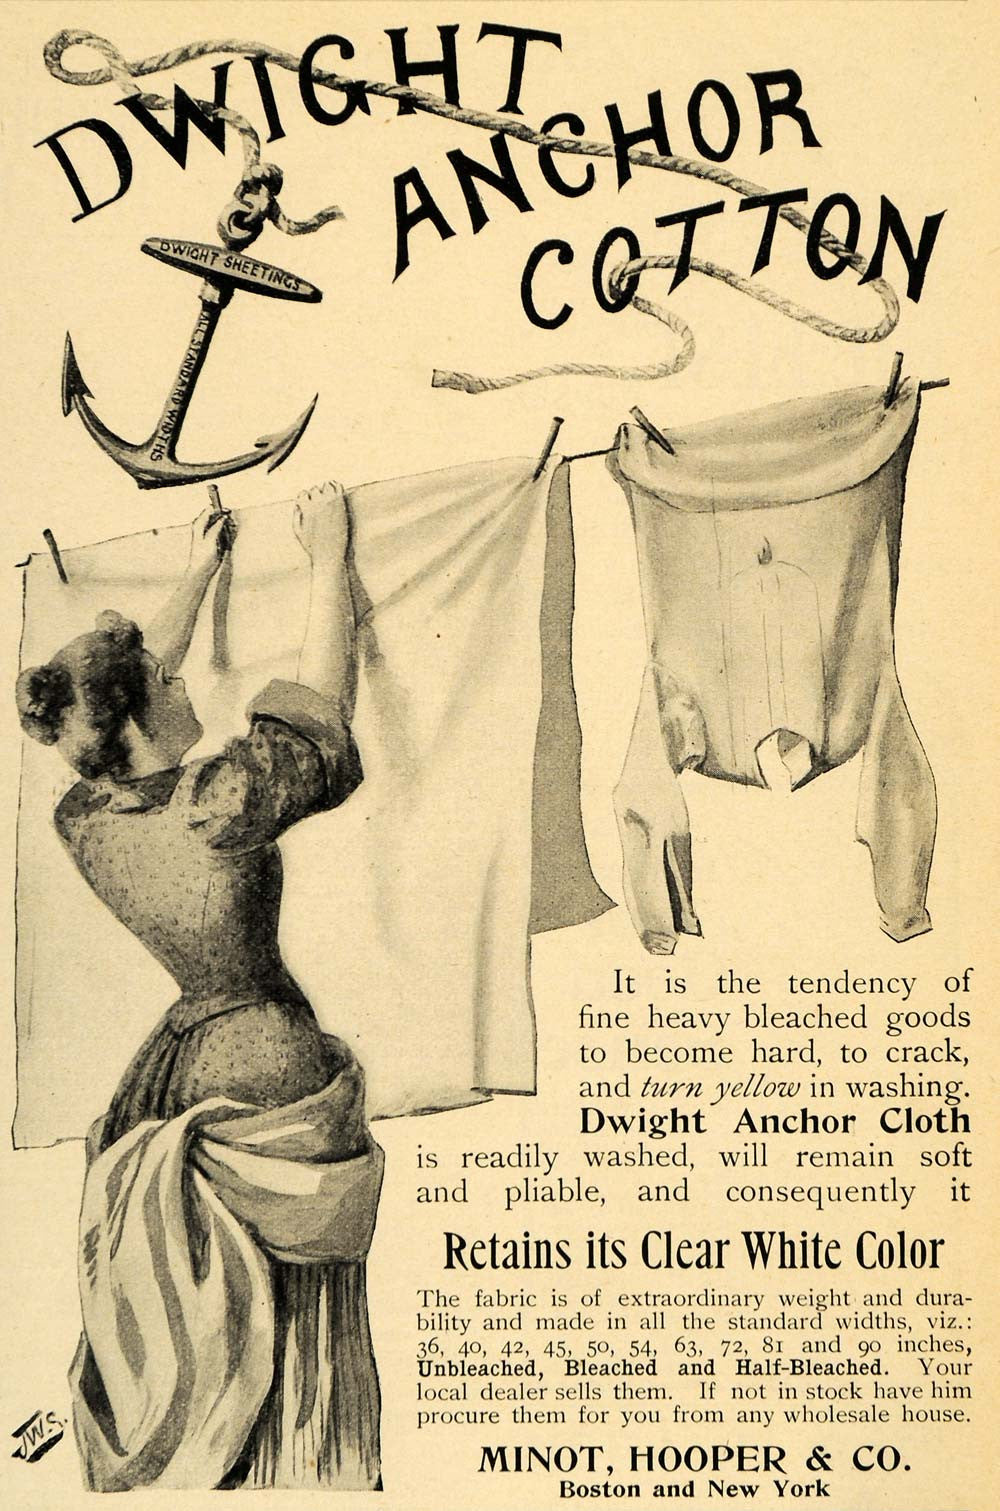 1895 Ad Dwight Anchor Cotton Minot Hooper & Company - ORIGINAL ADVERTISING LHJ3